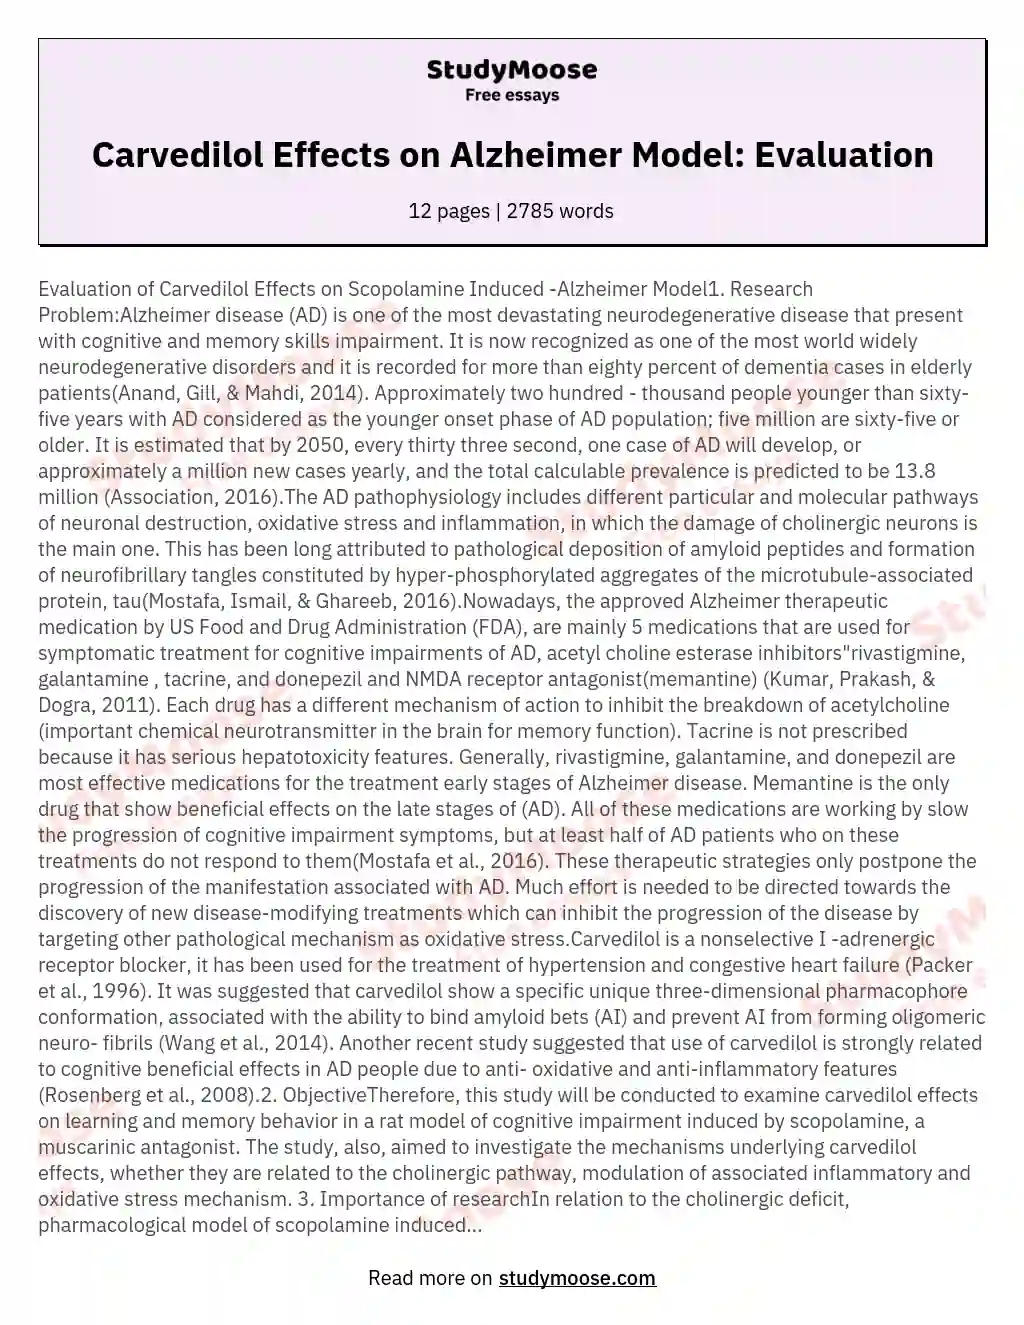 Carvedilol Effects on Alzheimer Model: Evaluation essay